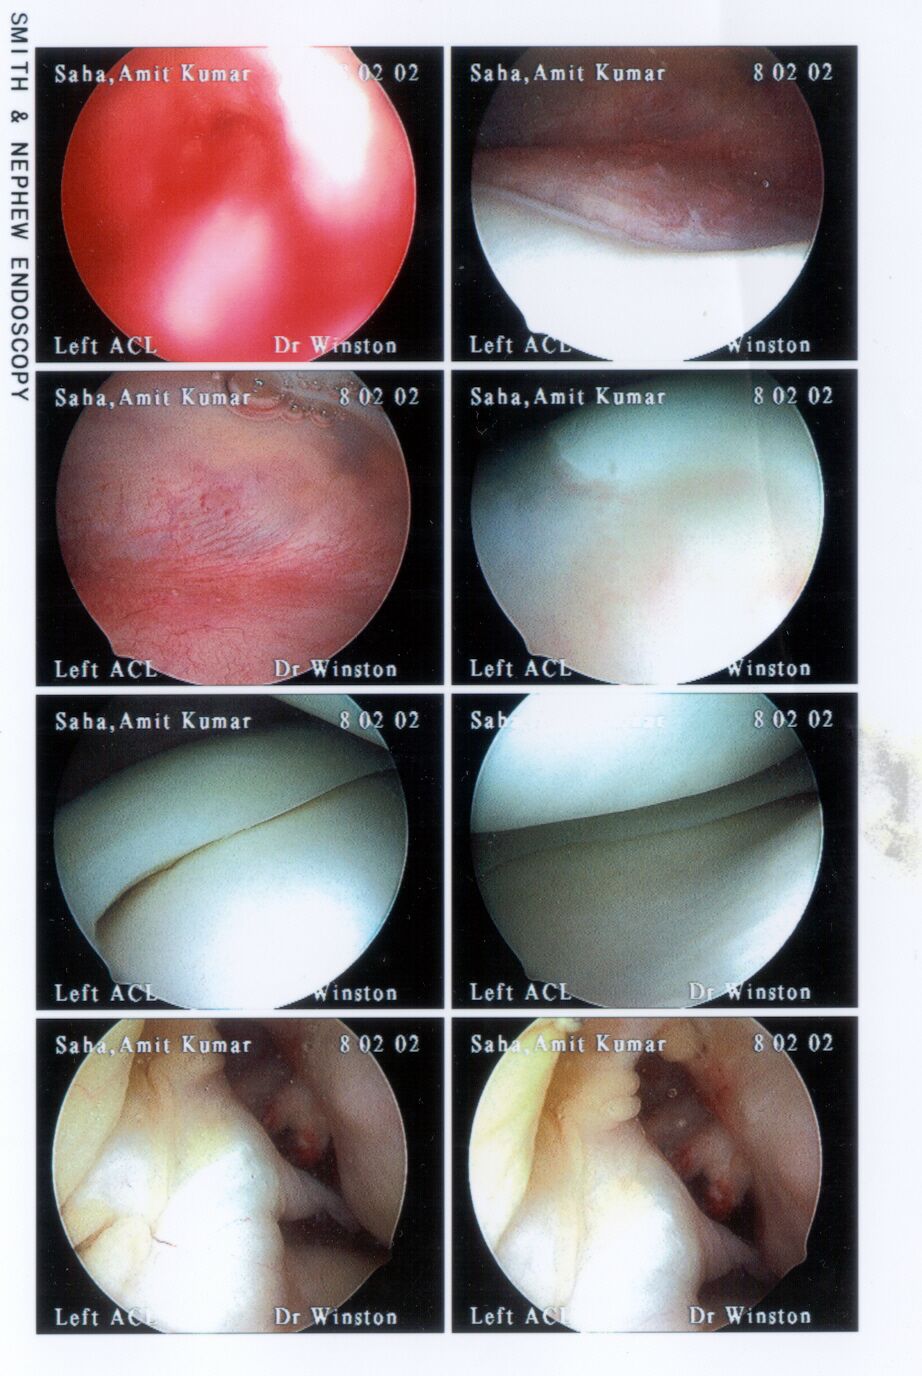 Endoscopic Images of Knee Interior 